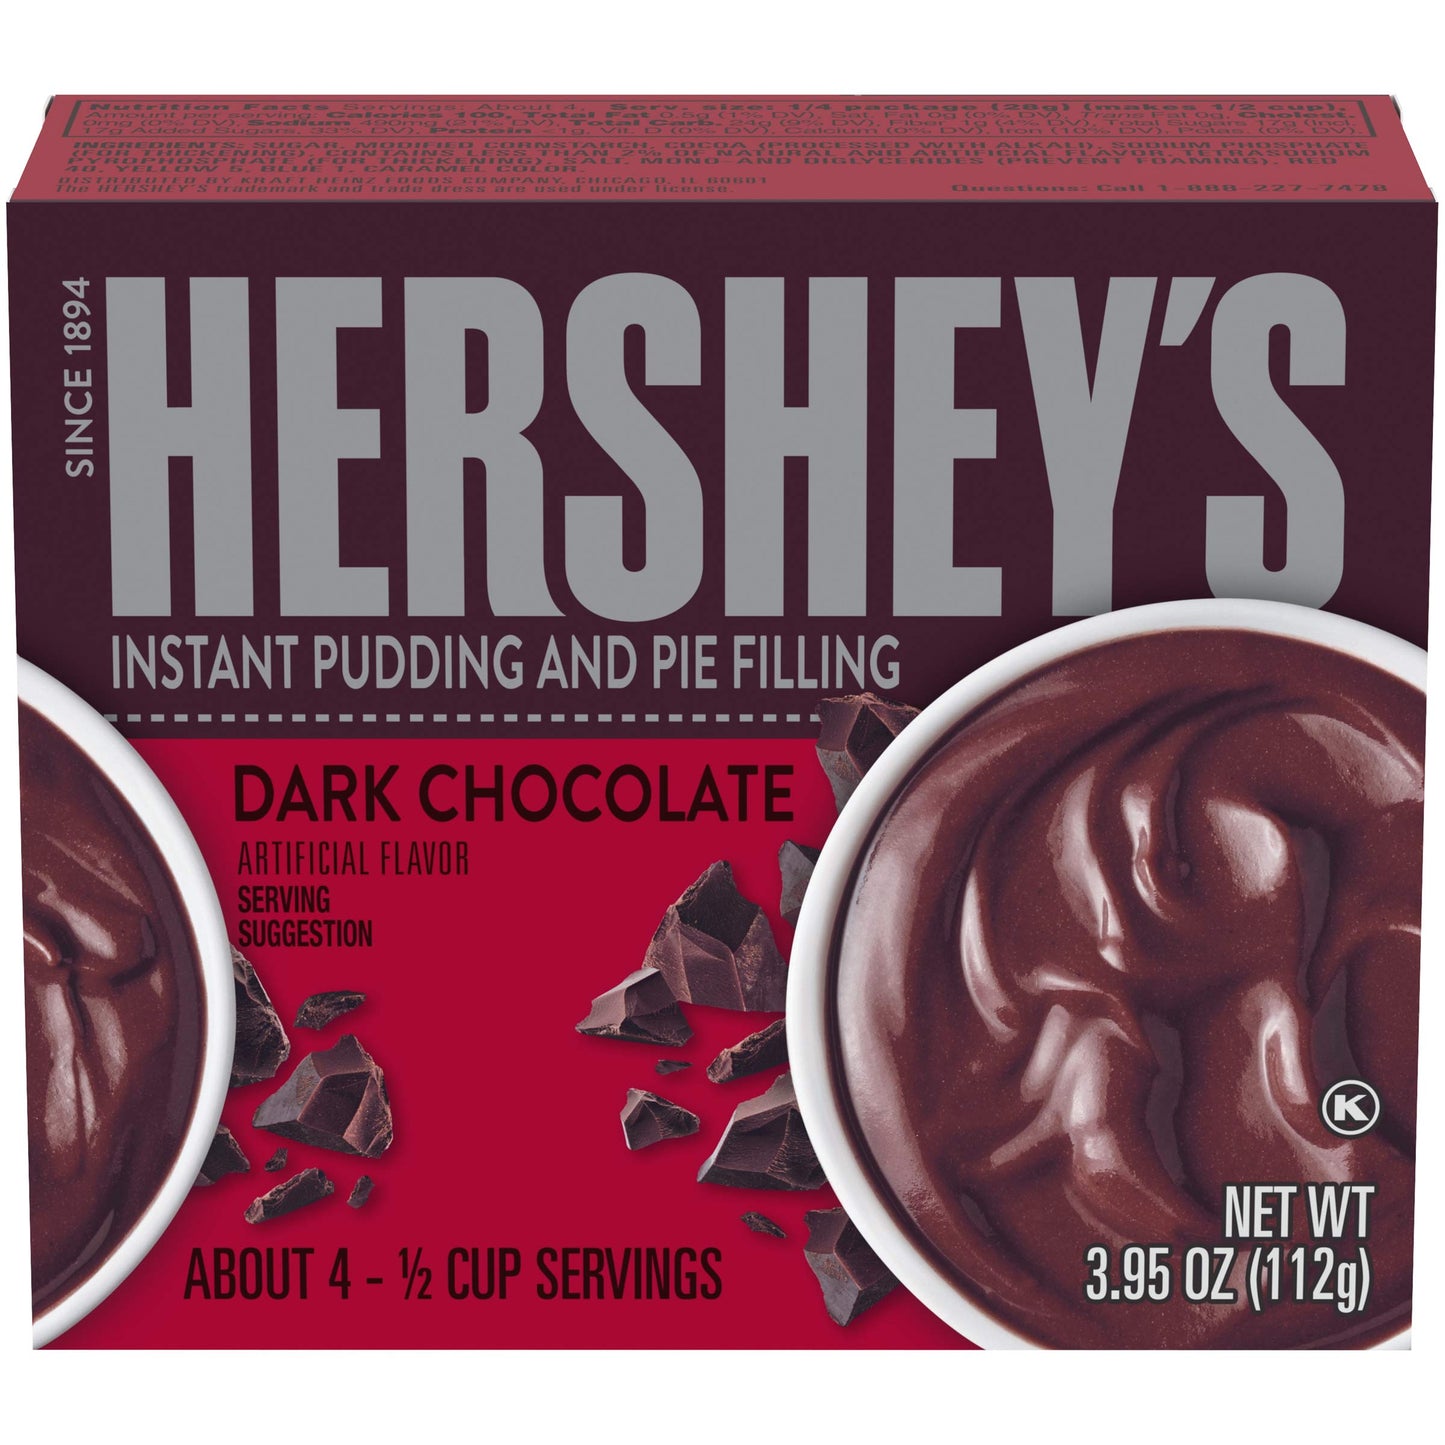 Hershey's Instant Pudding & Pie Filling - Dark Chocolate